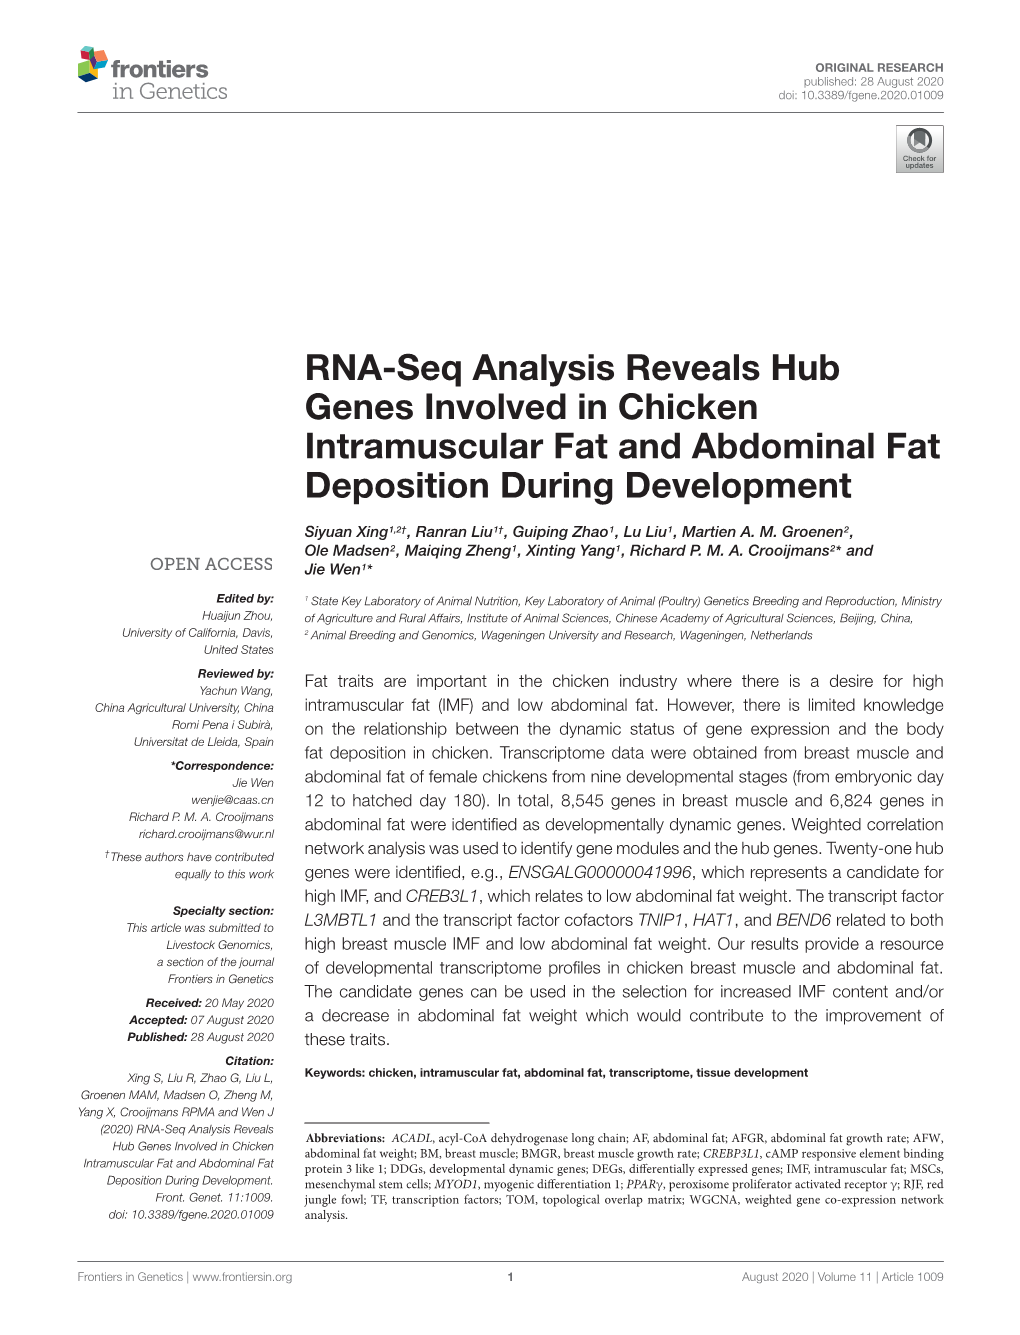 RNA-Seq Analysis Reveals Hub Genes Involved in Chicken Intramuscular Fat and Abdominal Fat Deposition During Development